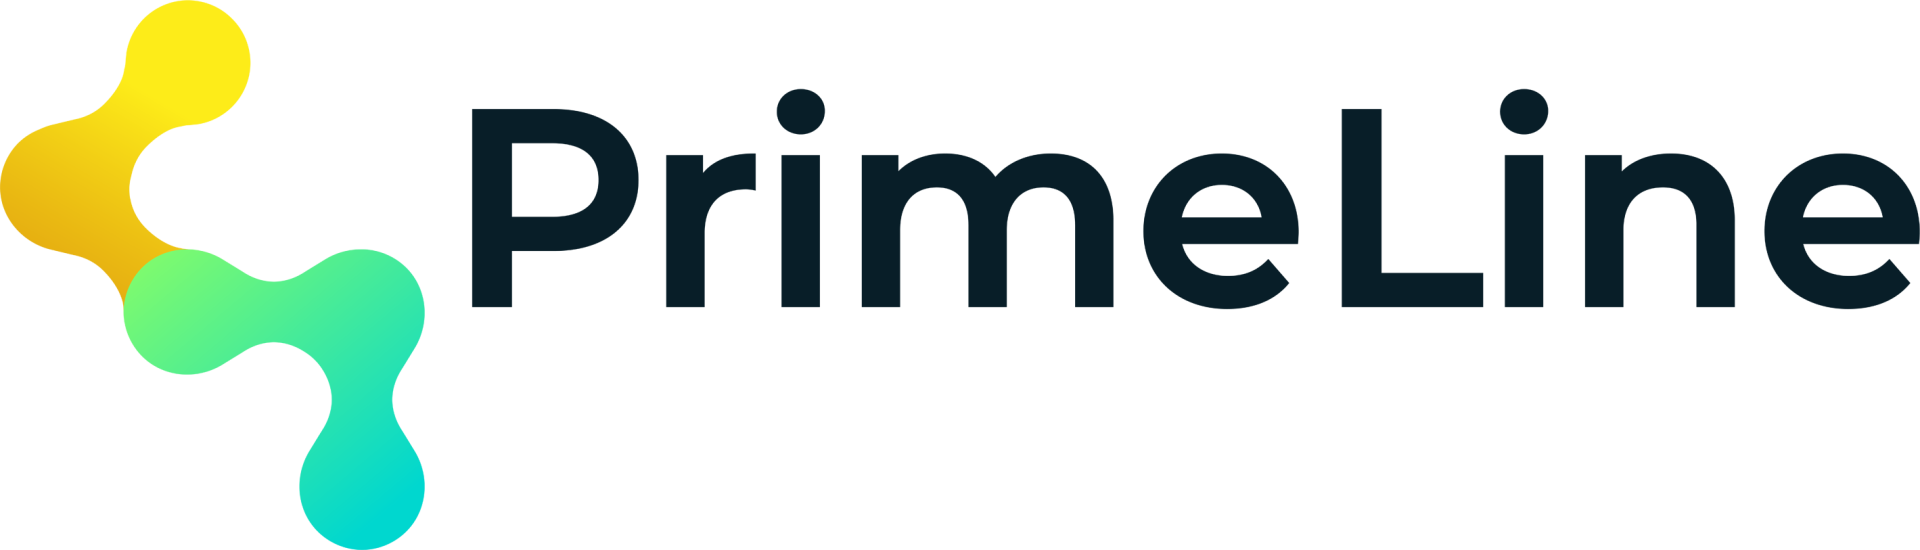 PrimeLine Marketing